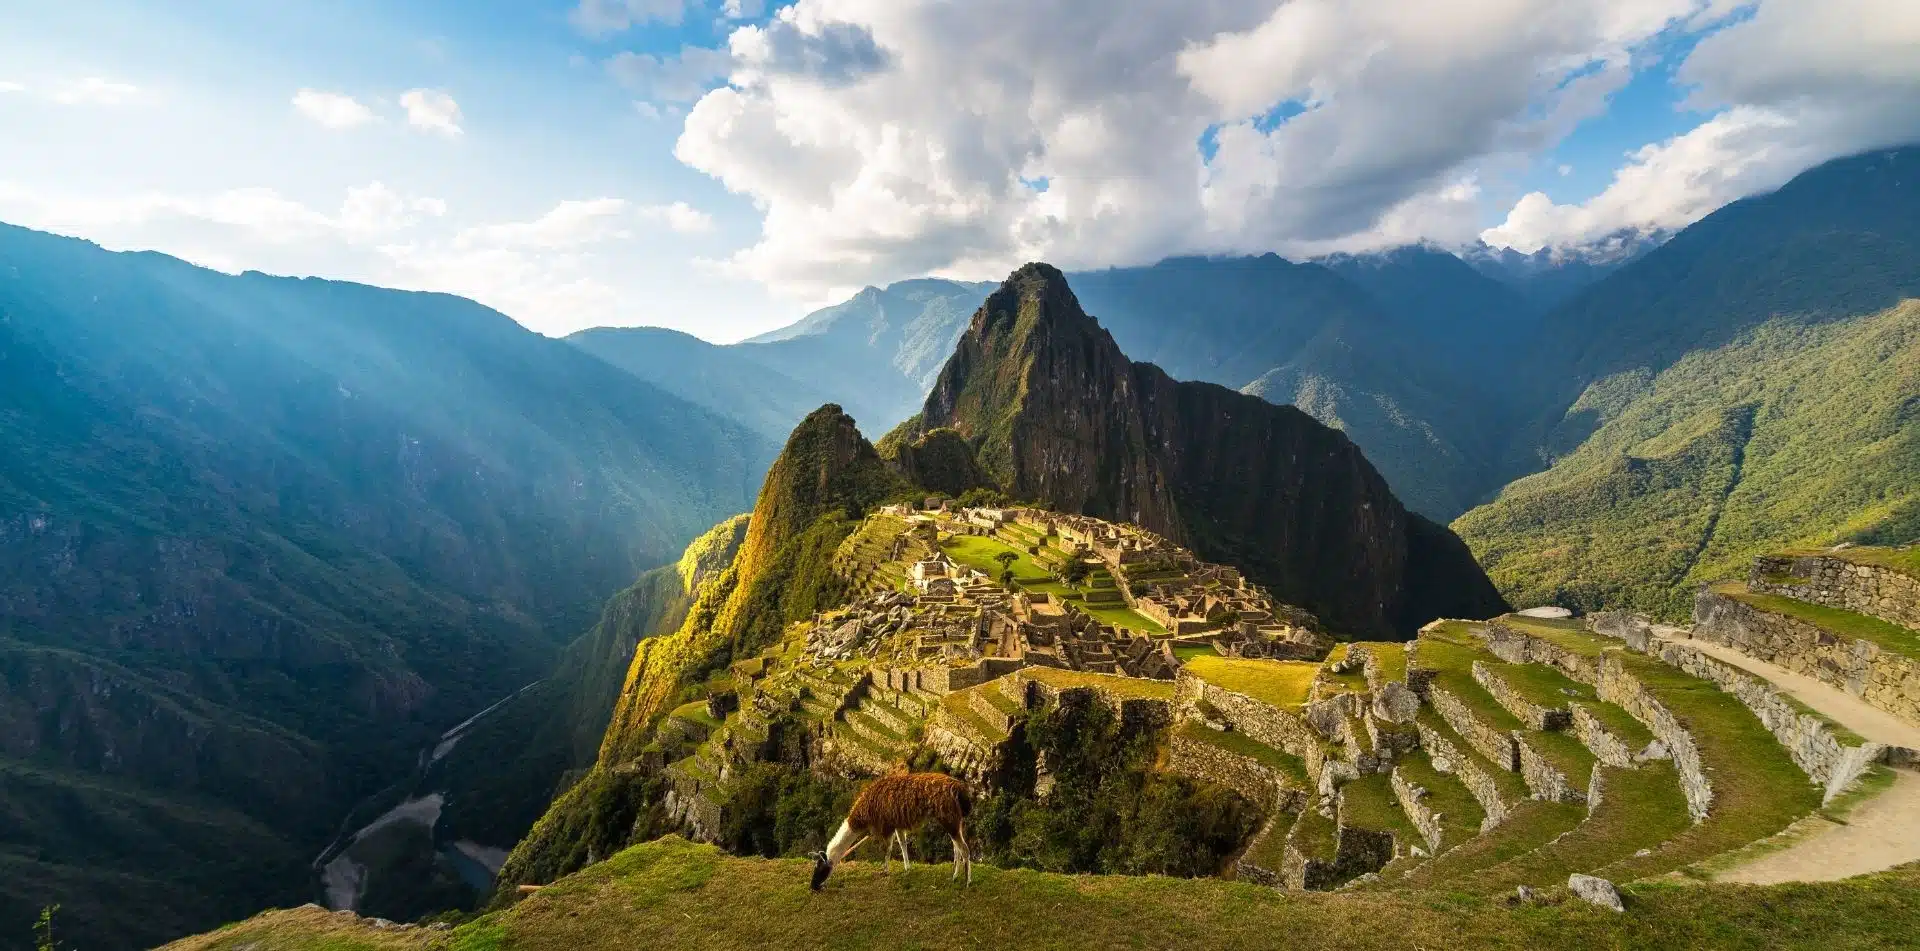 Llamas grazing at Machu Picchu